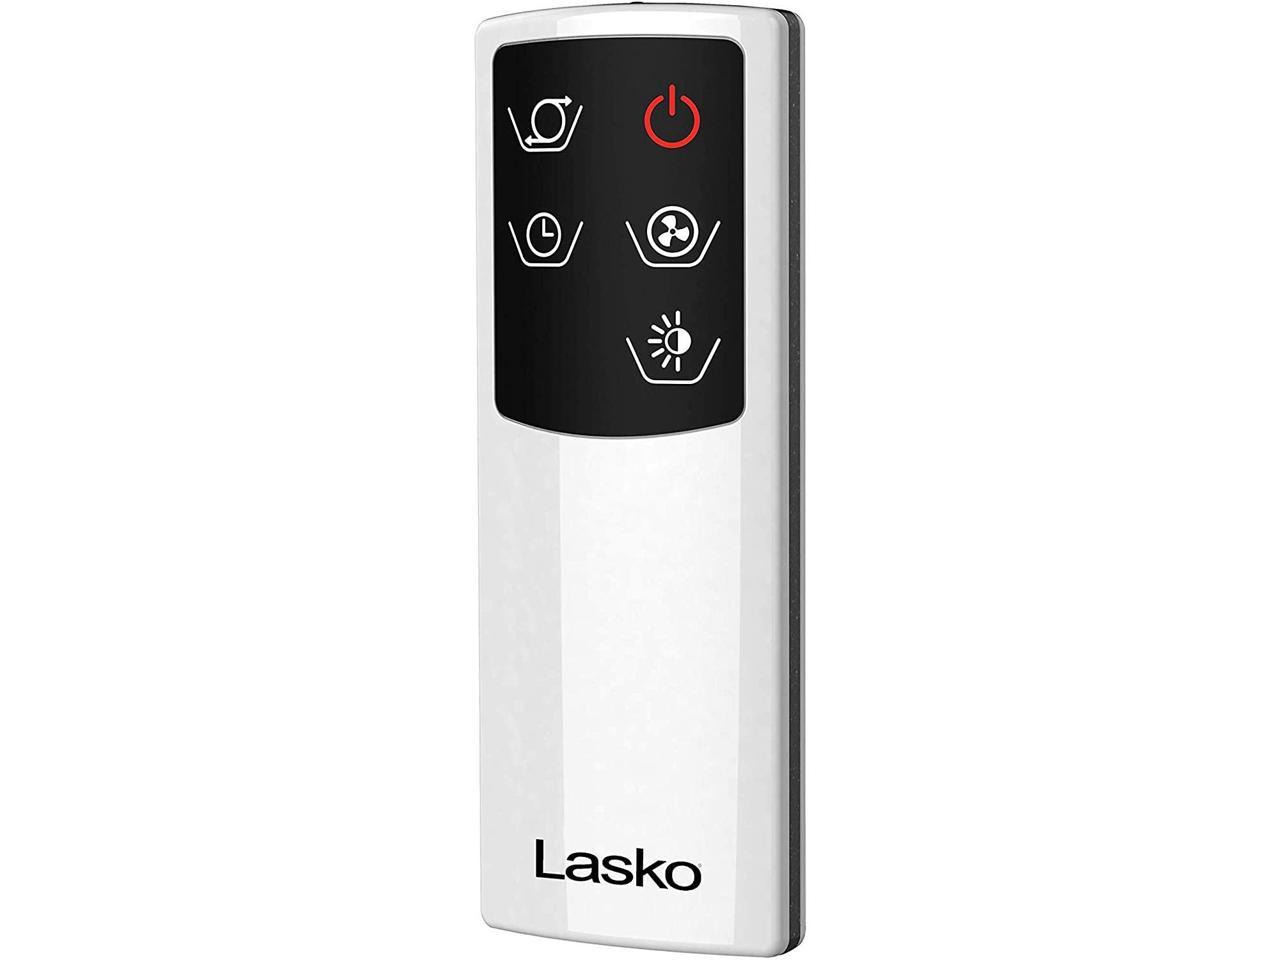 Lasko Products Lasko AC615 4 Speed Bladeless Remote Control Oscillating Whole Room Tower Fan